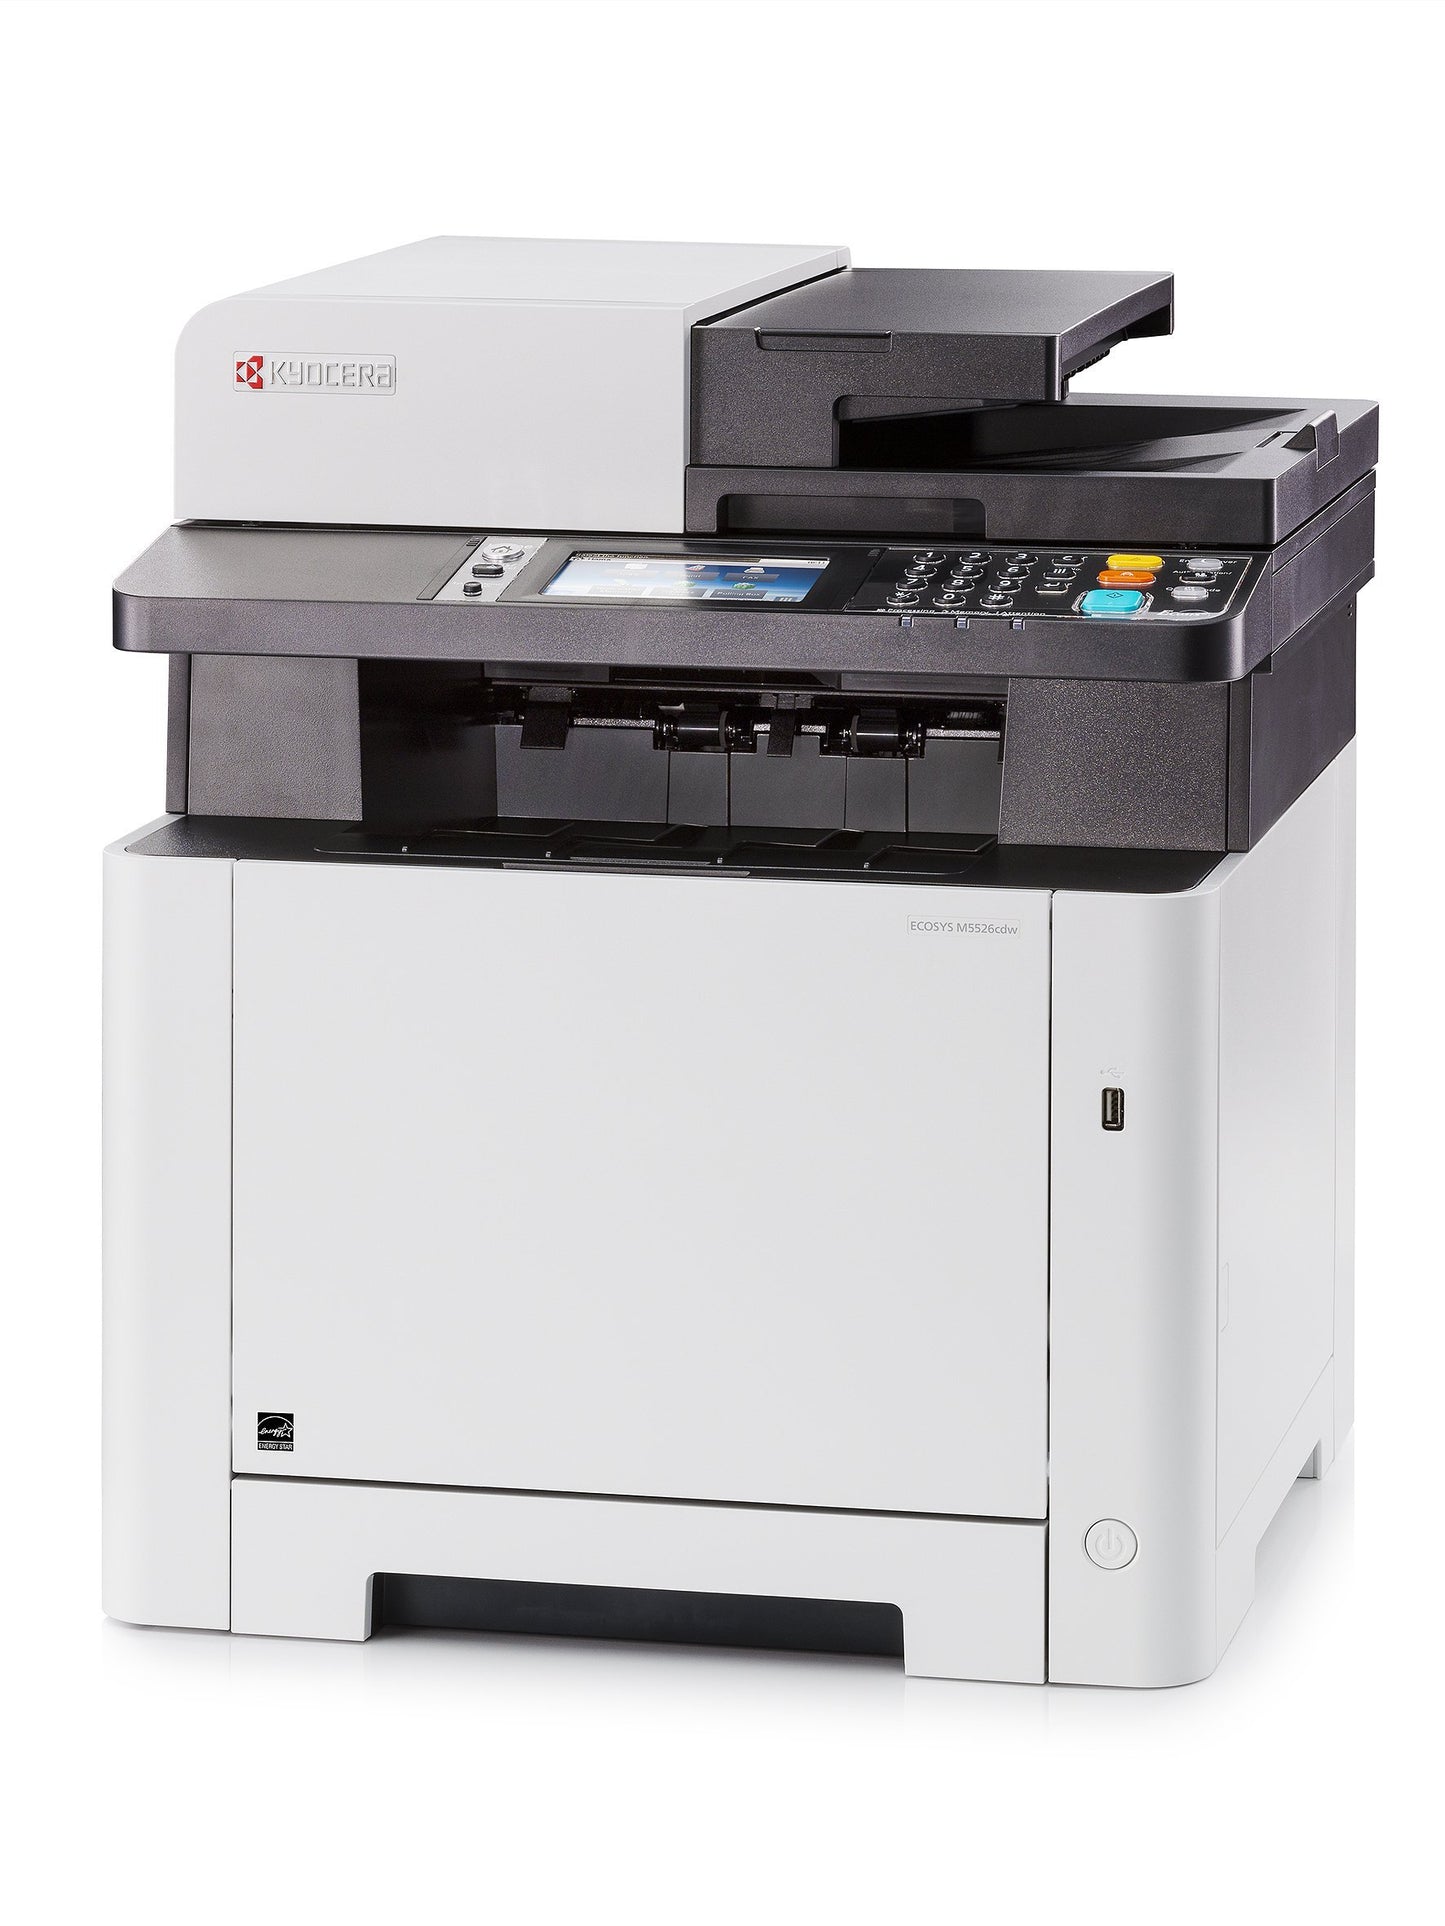 ECOSYS M5526cdw MFP Printer